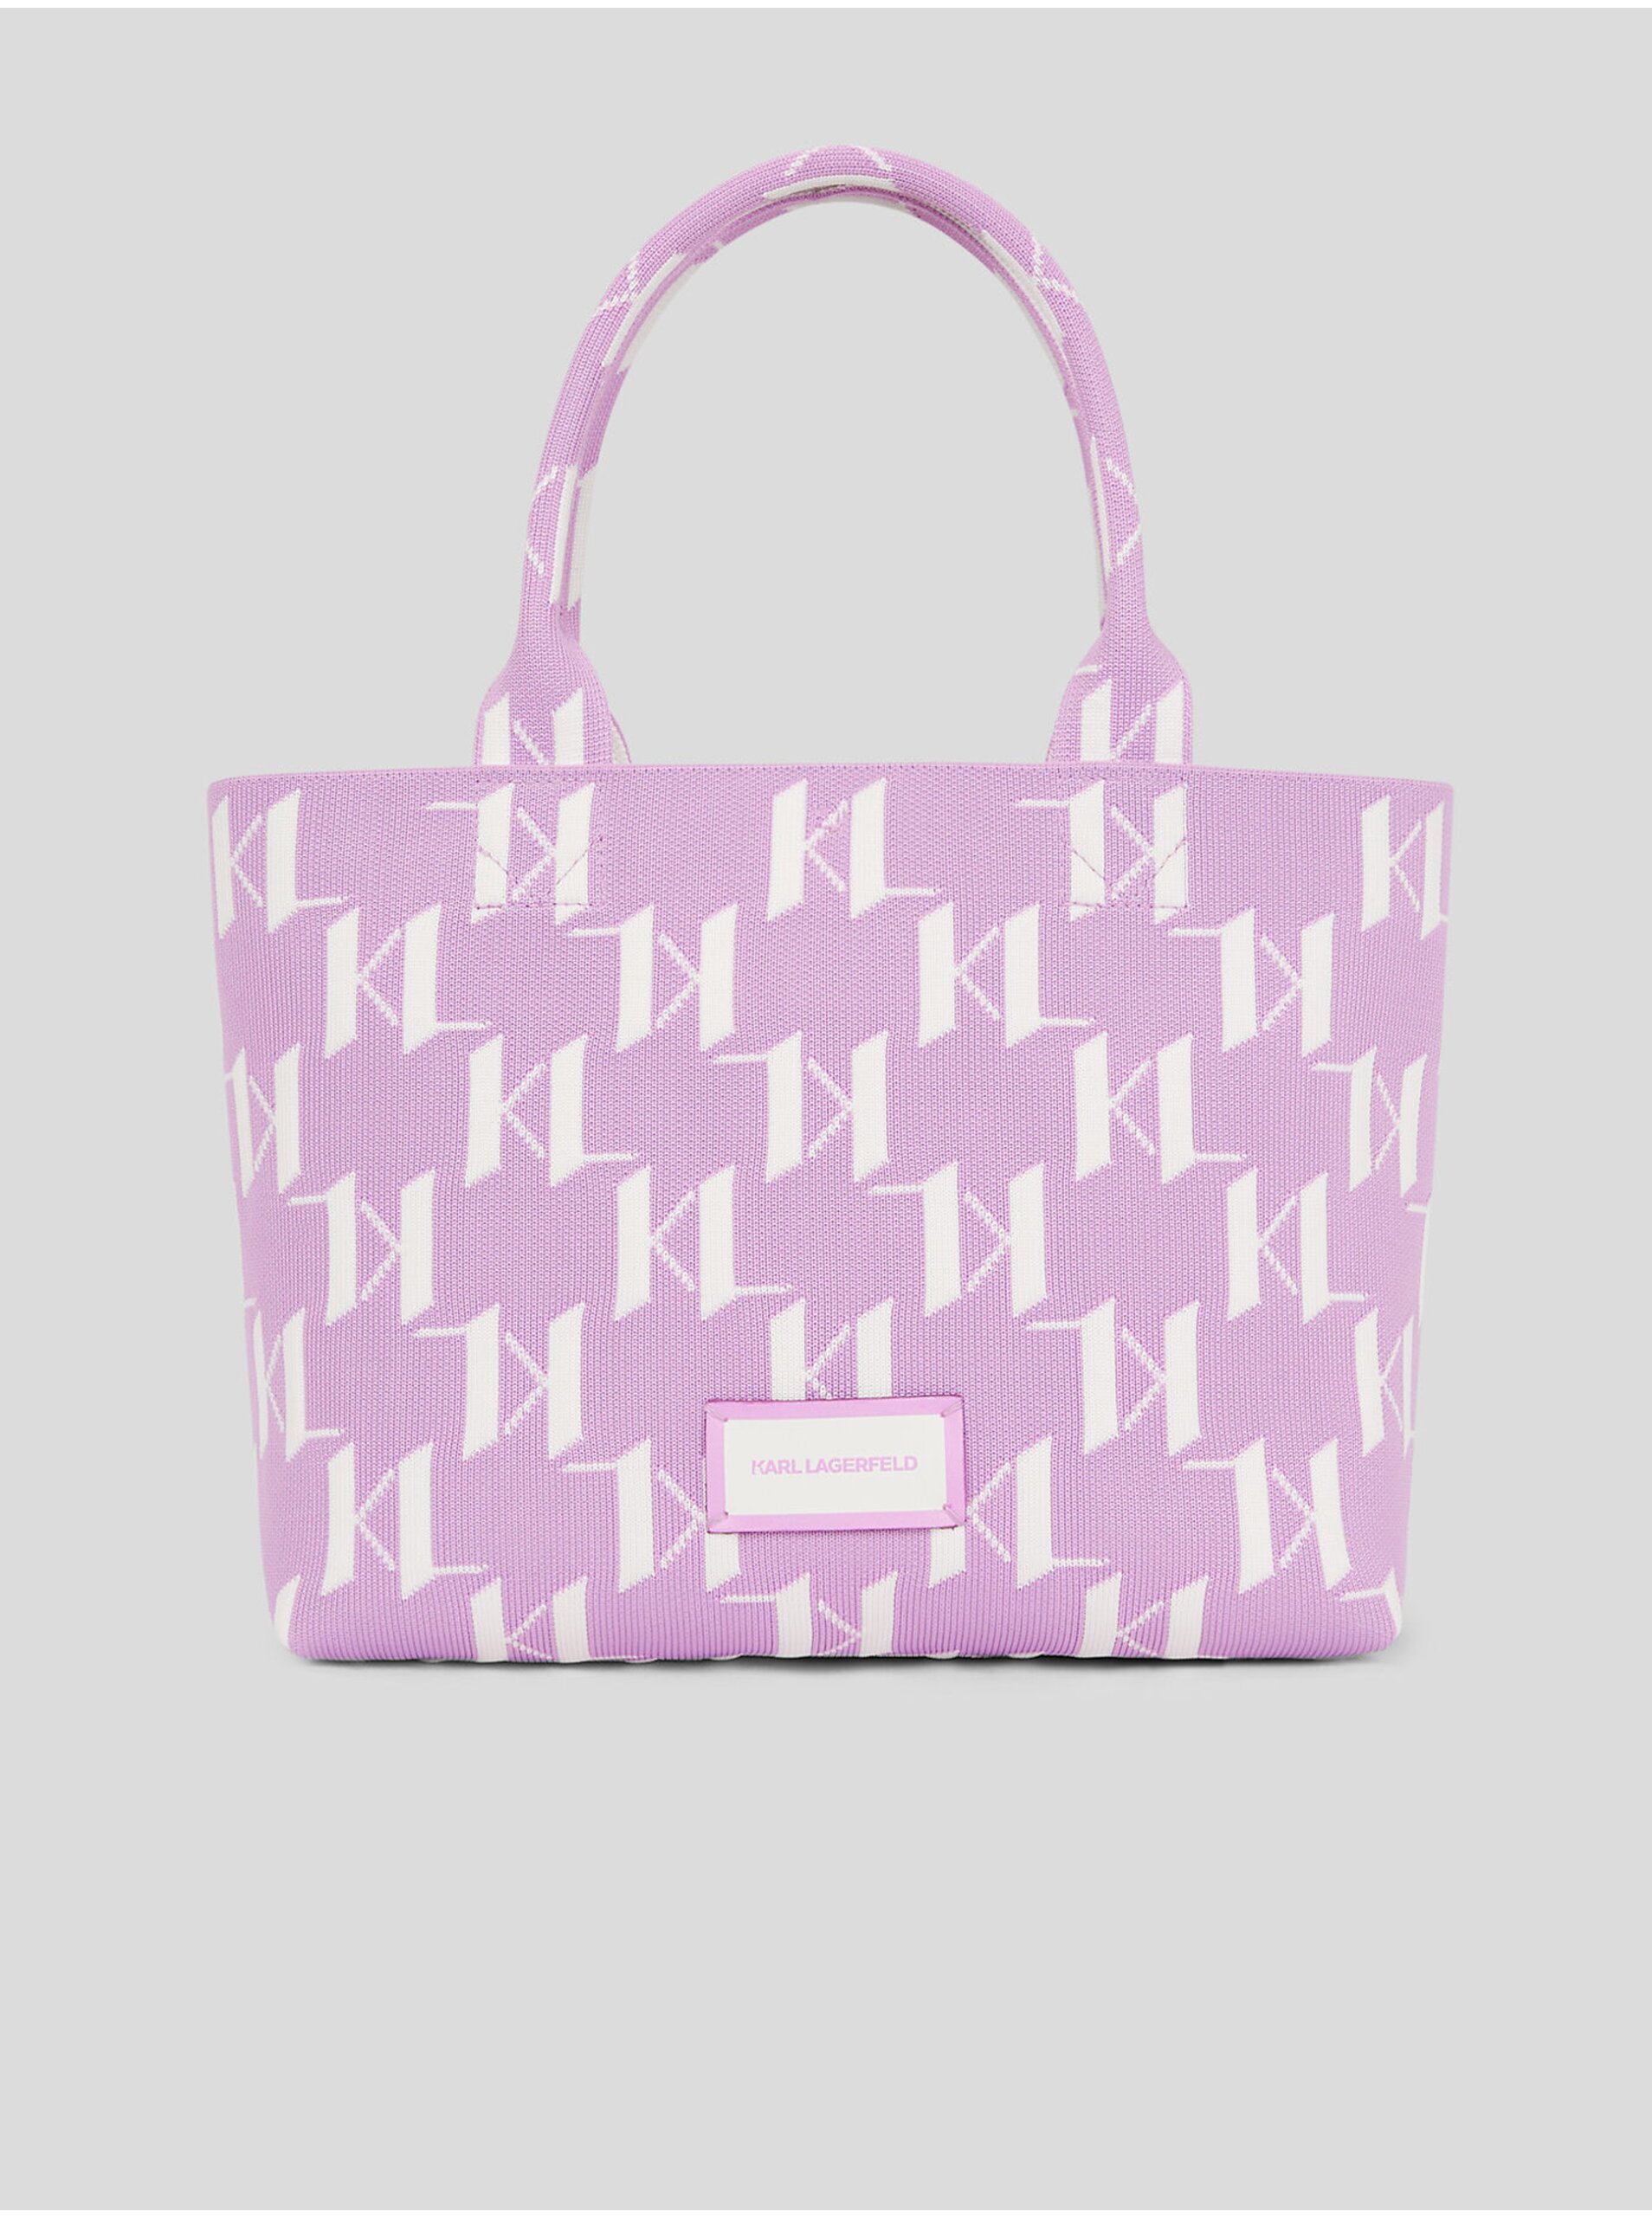 Women's White-Purple Patterned Handbag KARL LAGERFELD Monogram Knit - Women